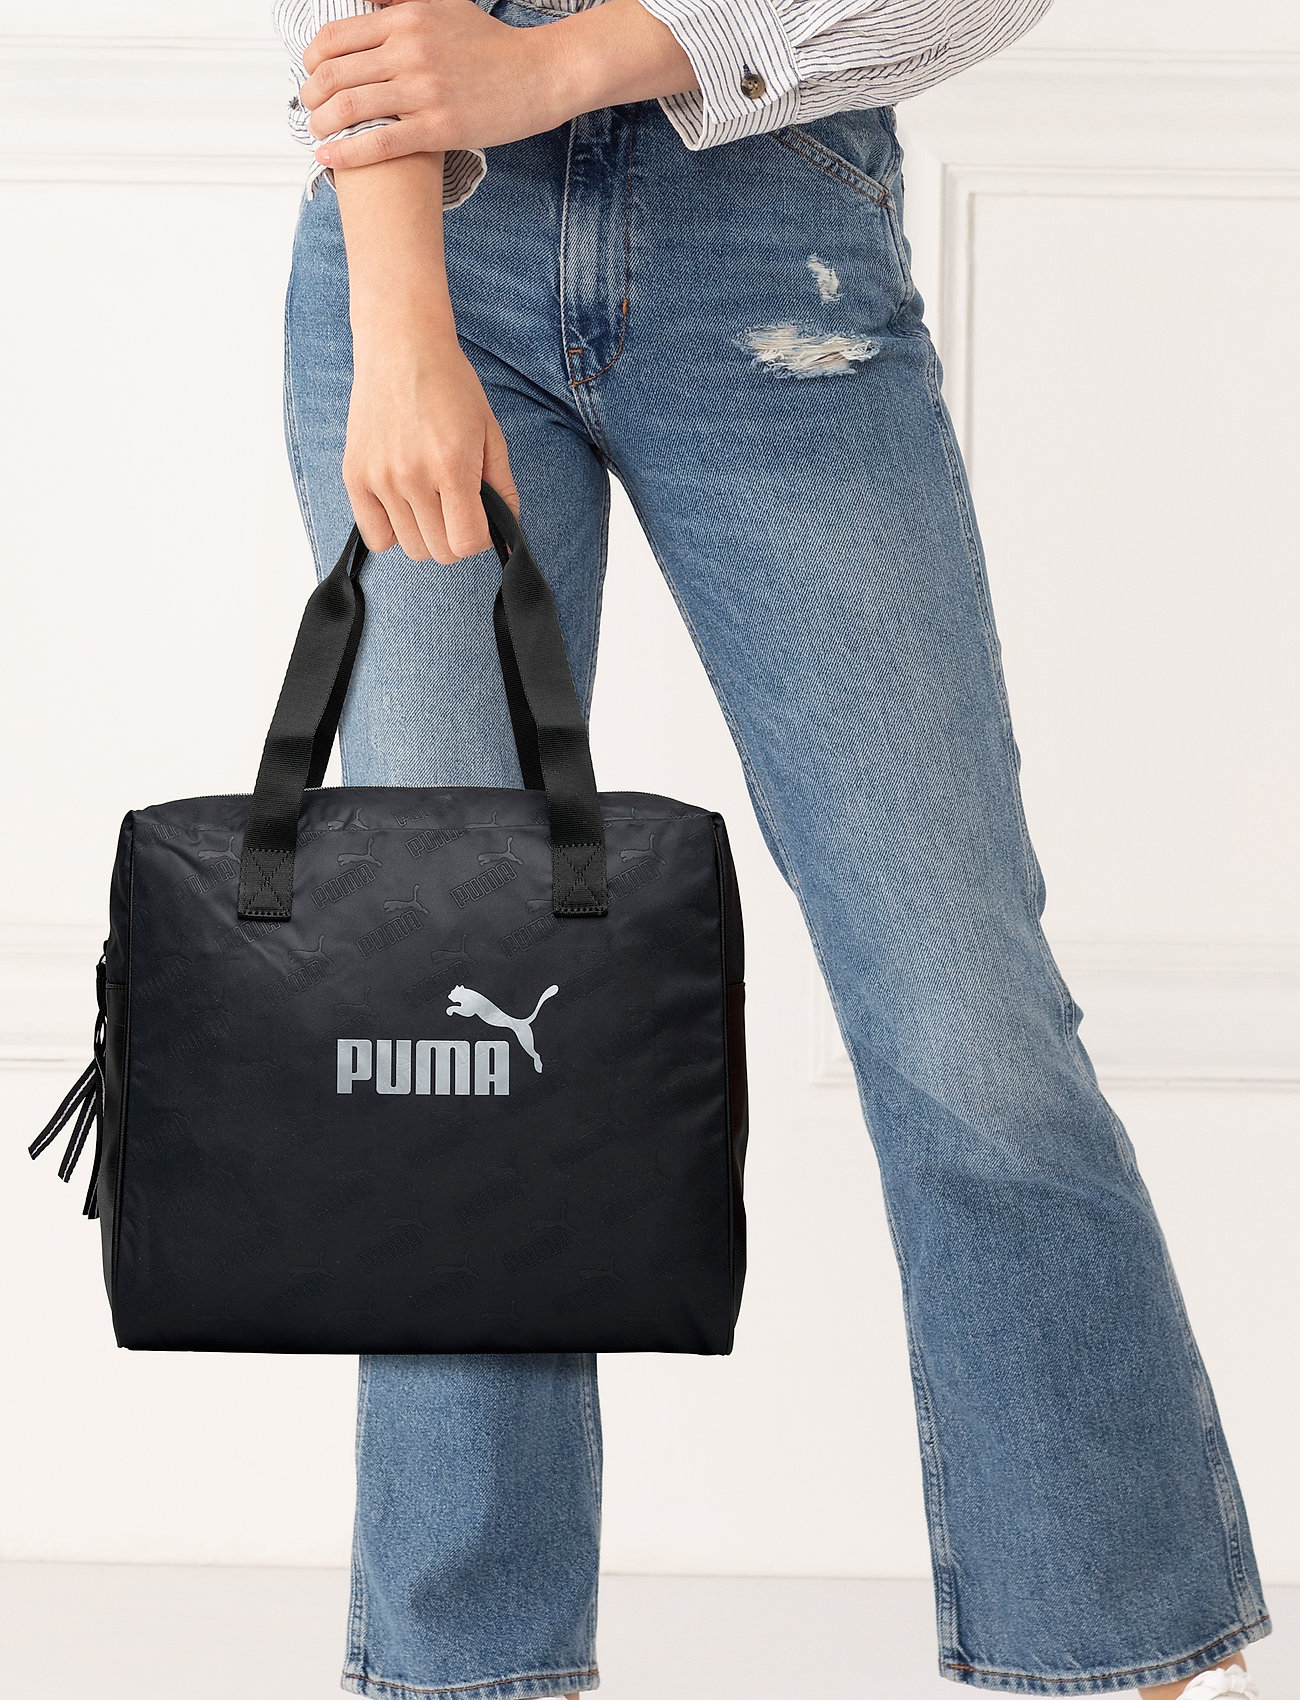 Wmn Core Up Large Shopper (Puma Black) (23.10 €) - PUMA - | Boozt.com